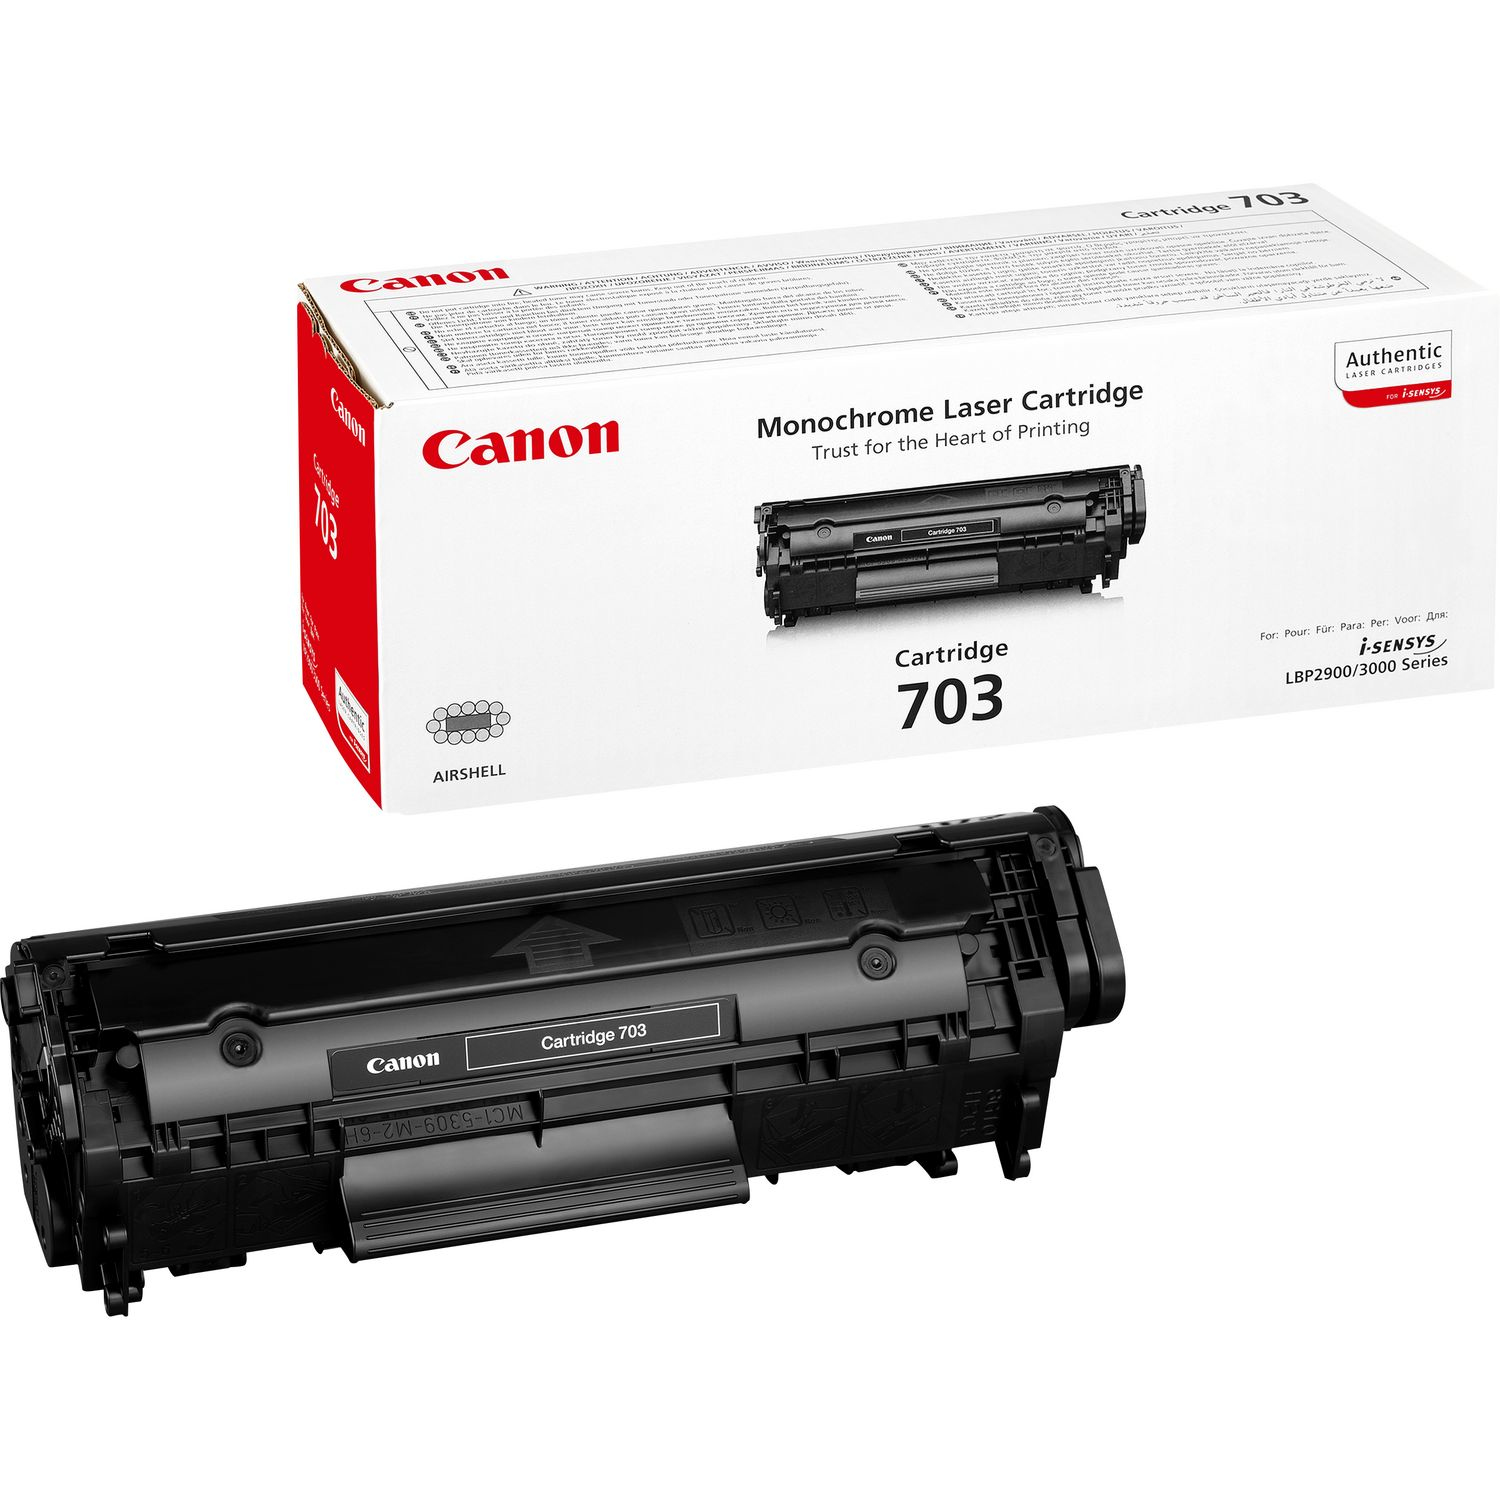 Toner 703 per Canon Supplies Copier 7616a005 4960999256016